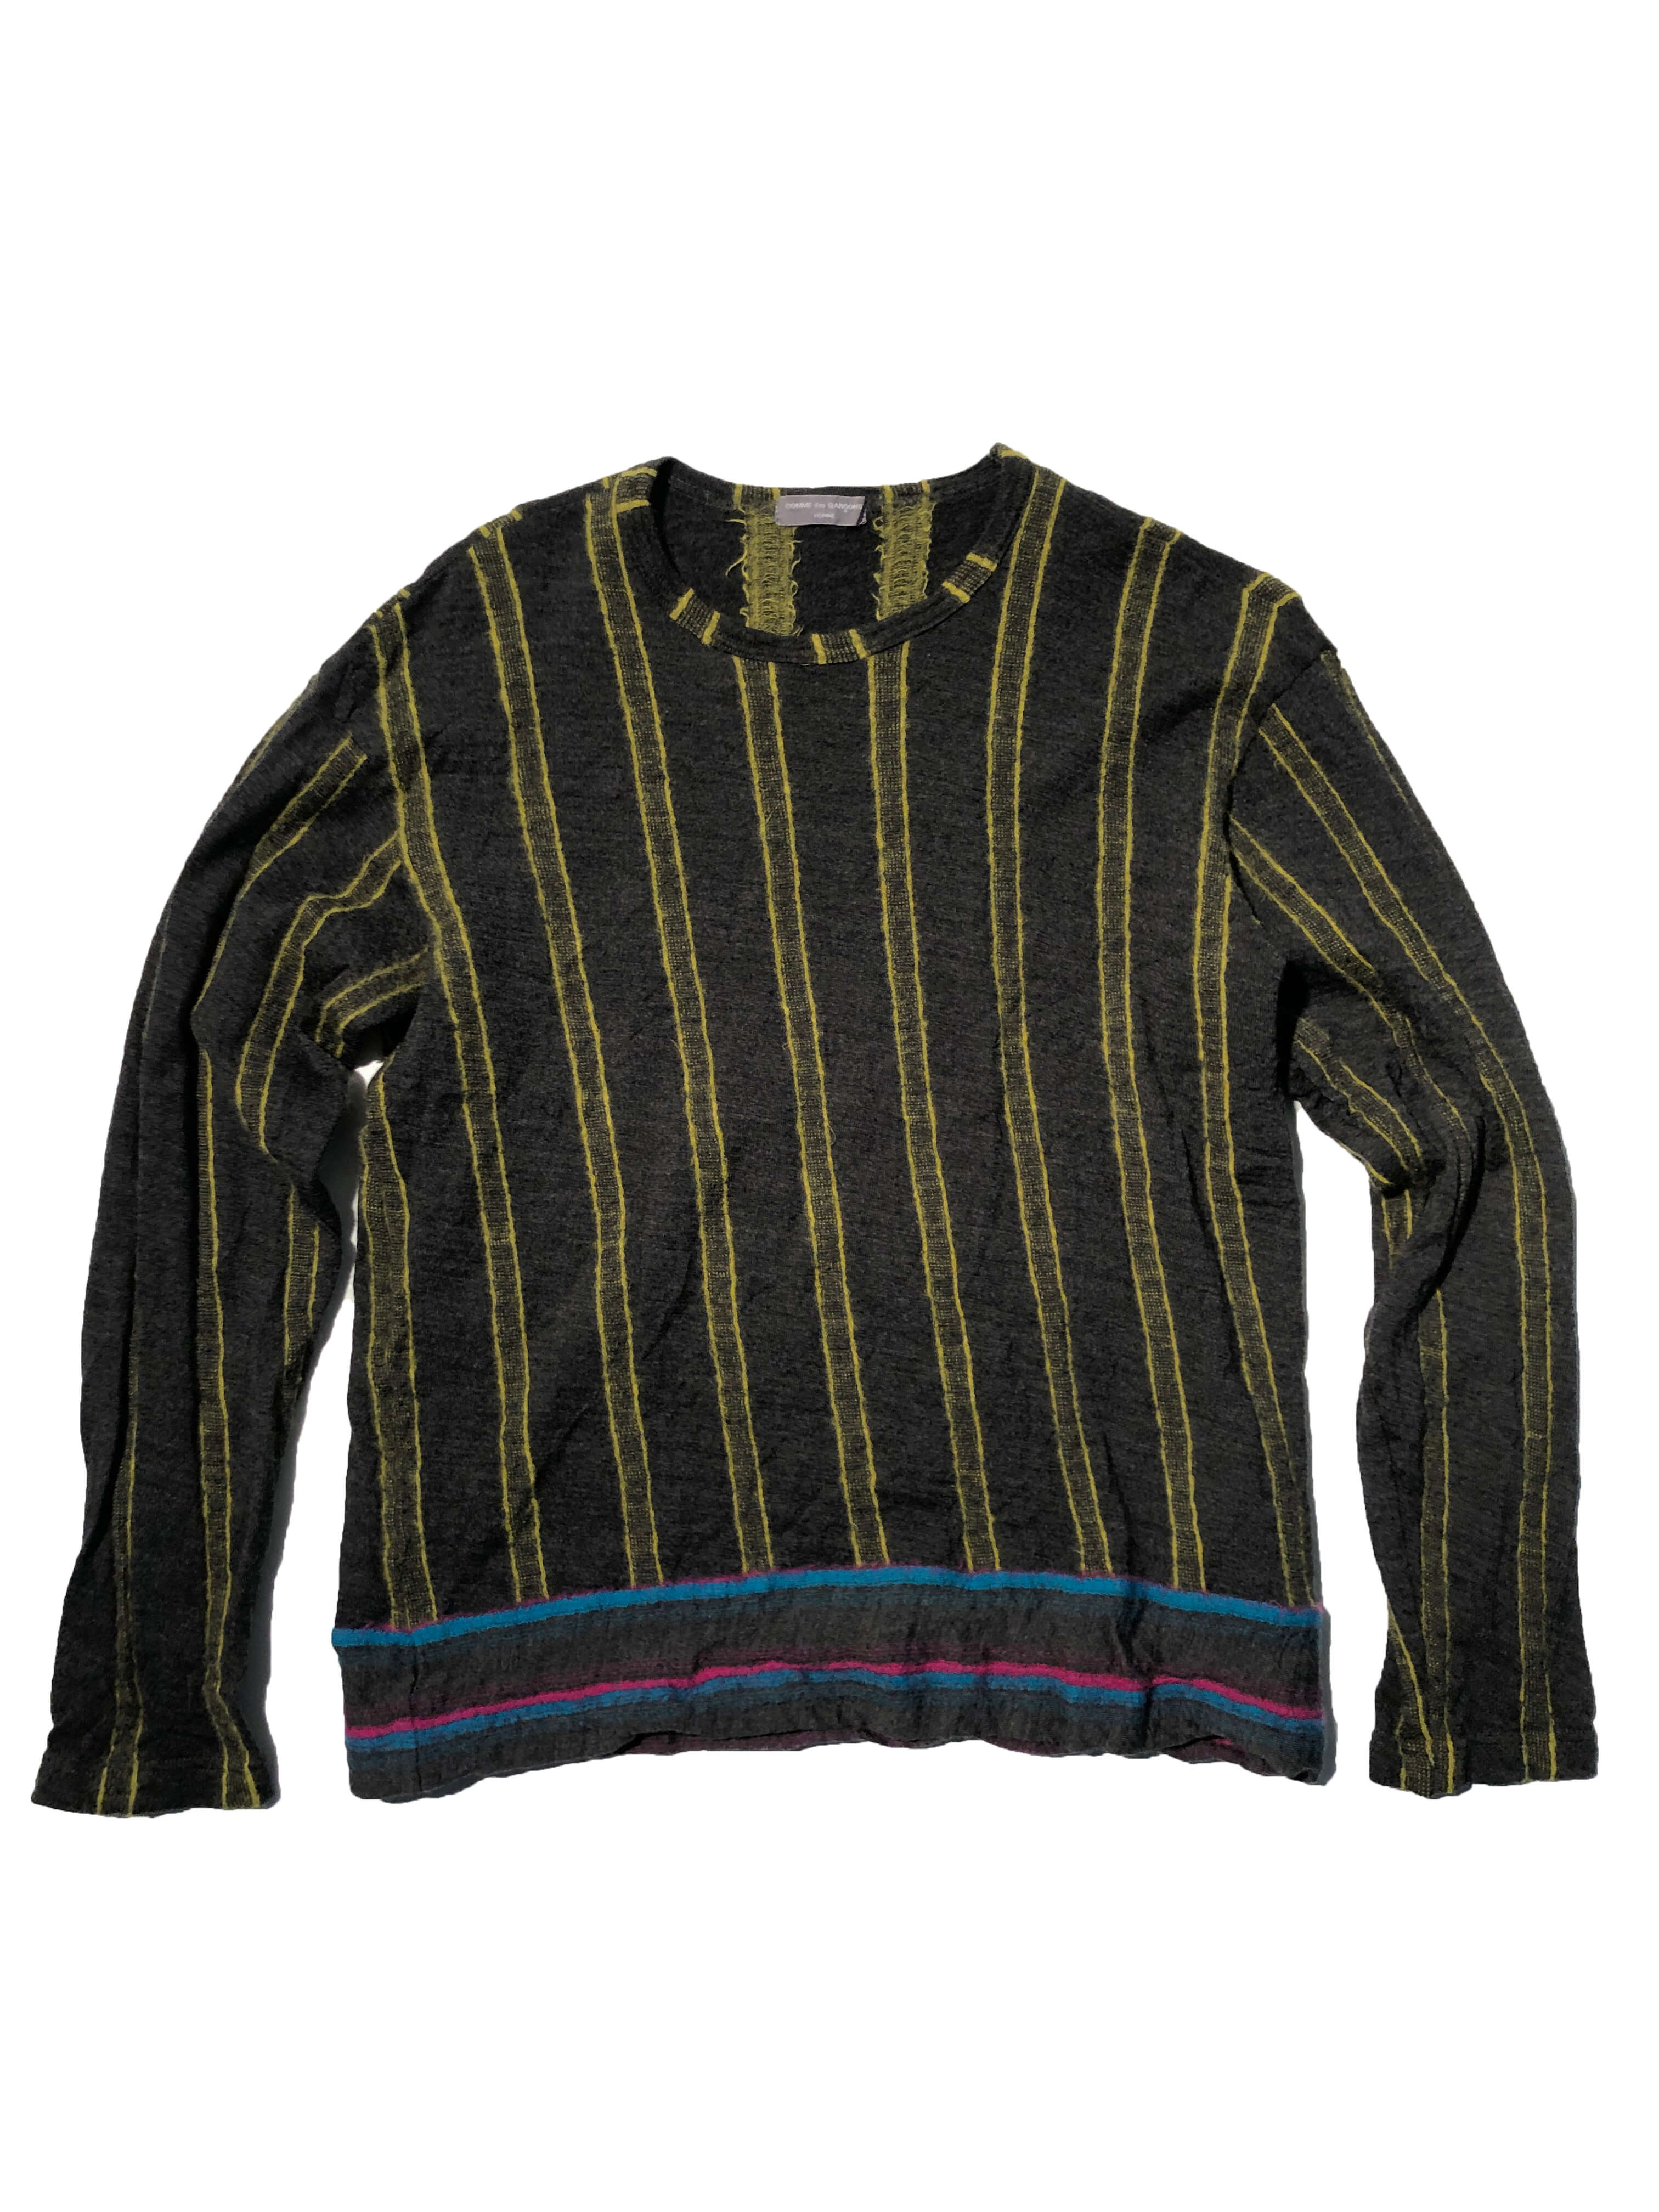 COMME des GARCONS HOMME ad2001 sweater